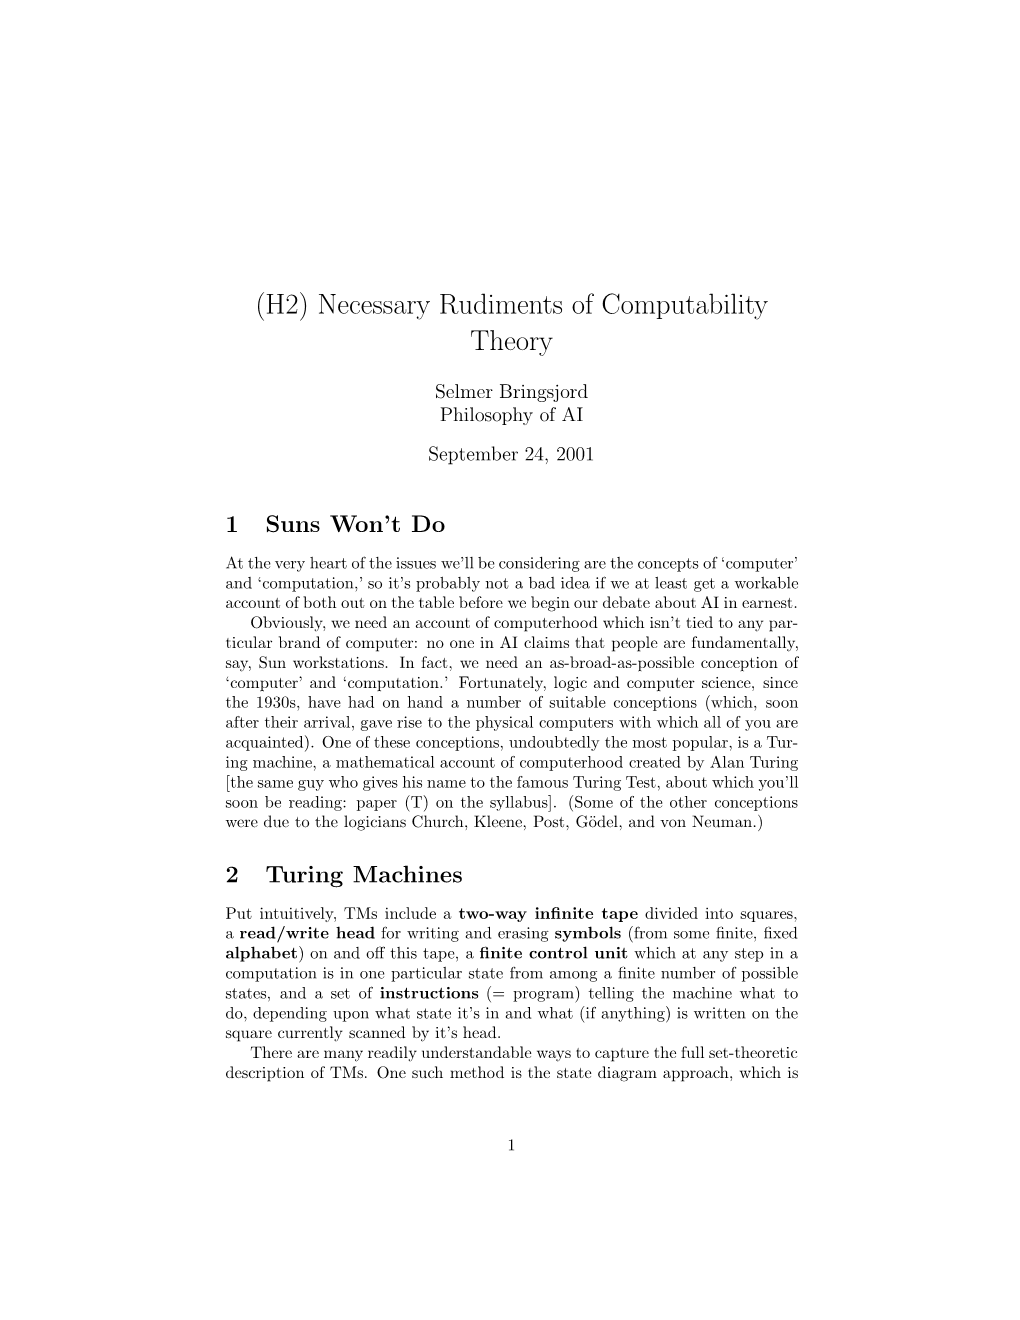 (H2) Necessary Rudiments of Computability Theory